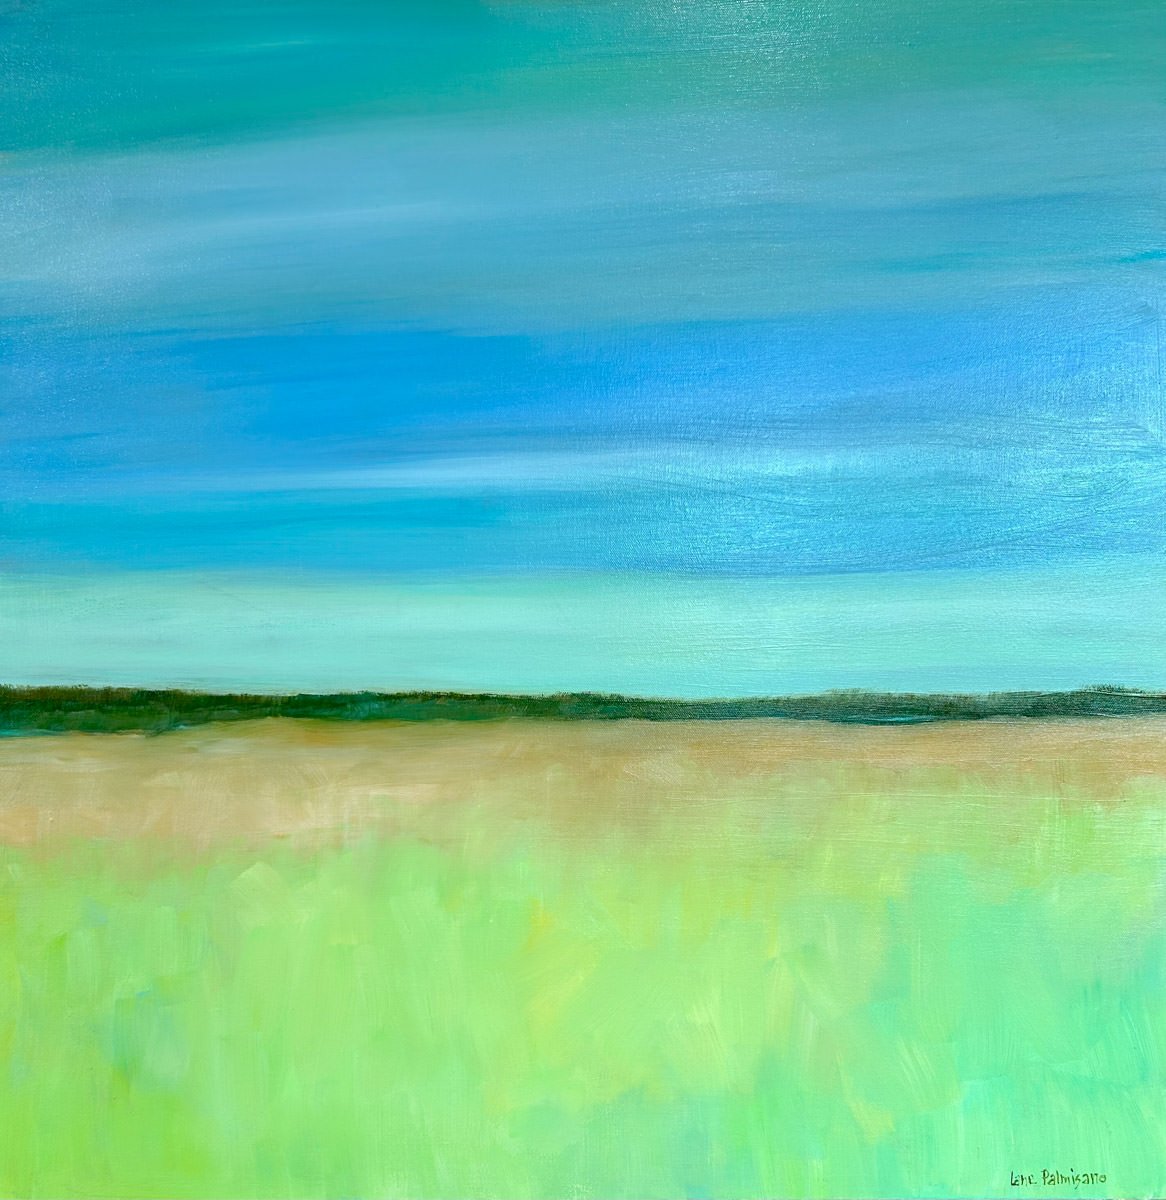    Fringe   , Oil on canvas, 30x30 $2200  